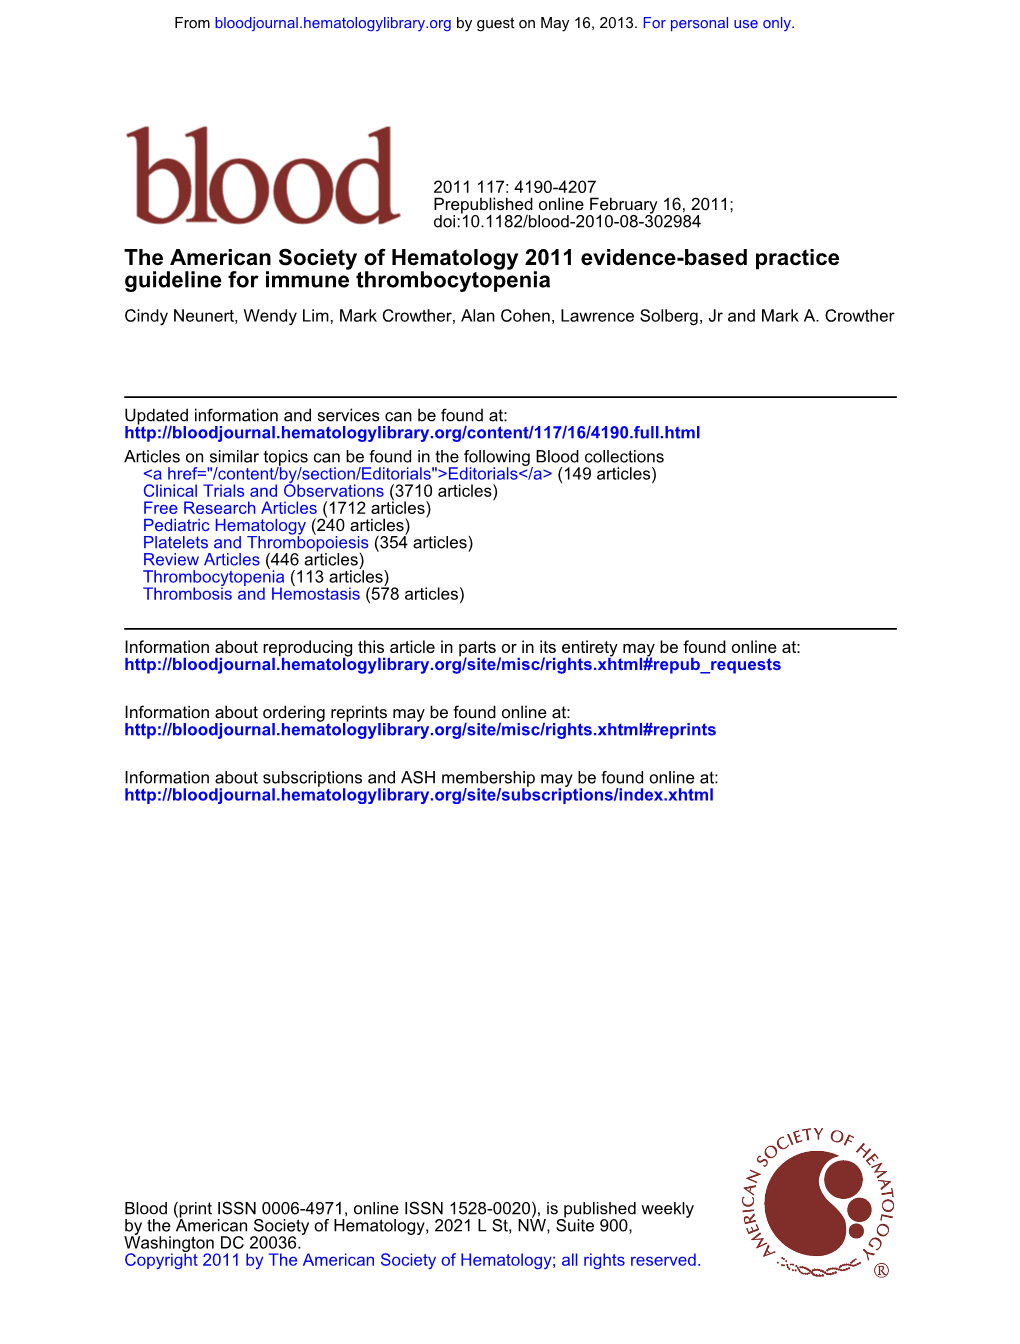 The American Society of Hematology 2011 Evidence-Based Practice Guideline for Immune Thrombocytopenia